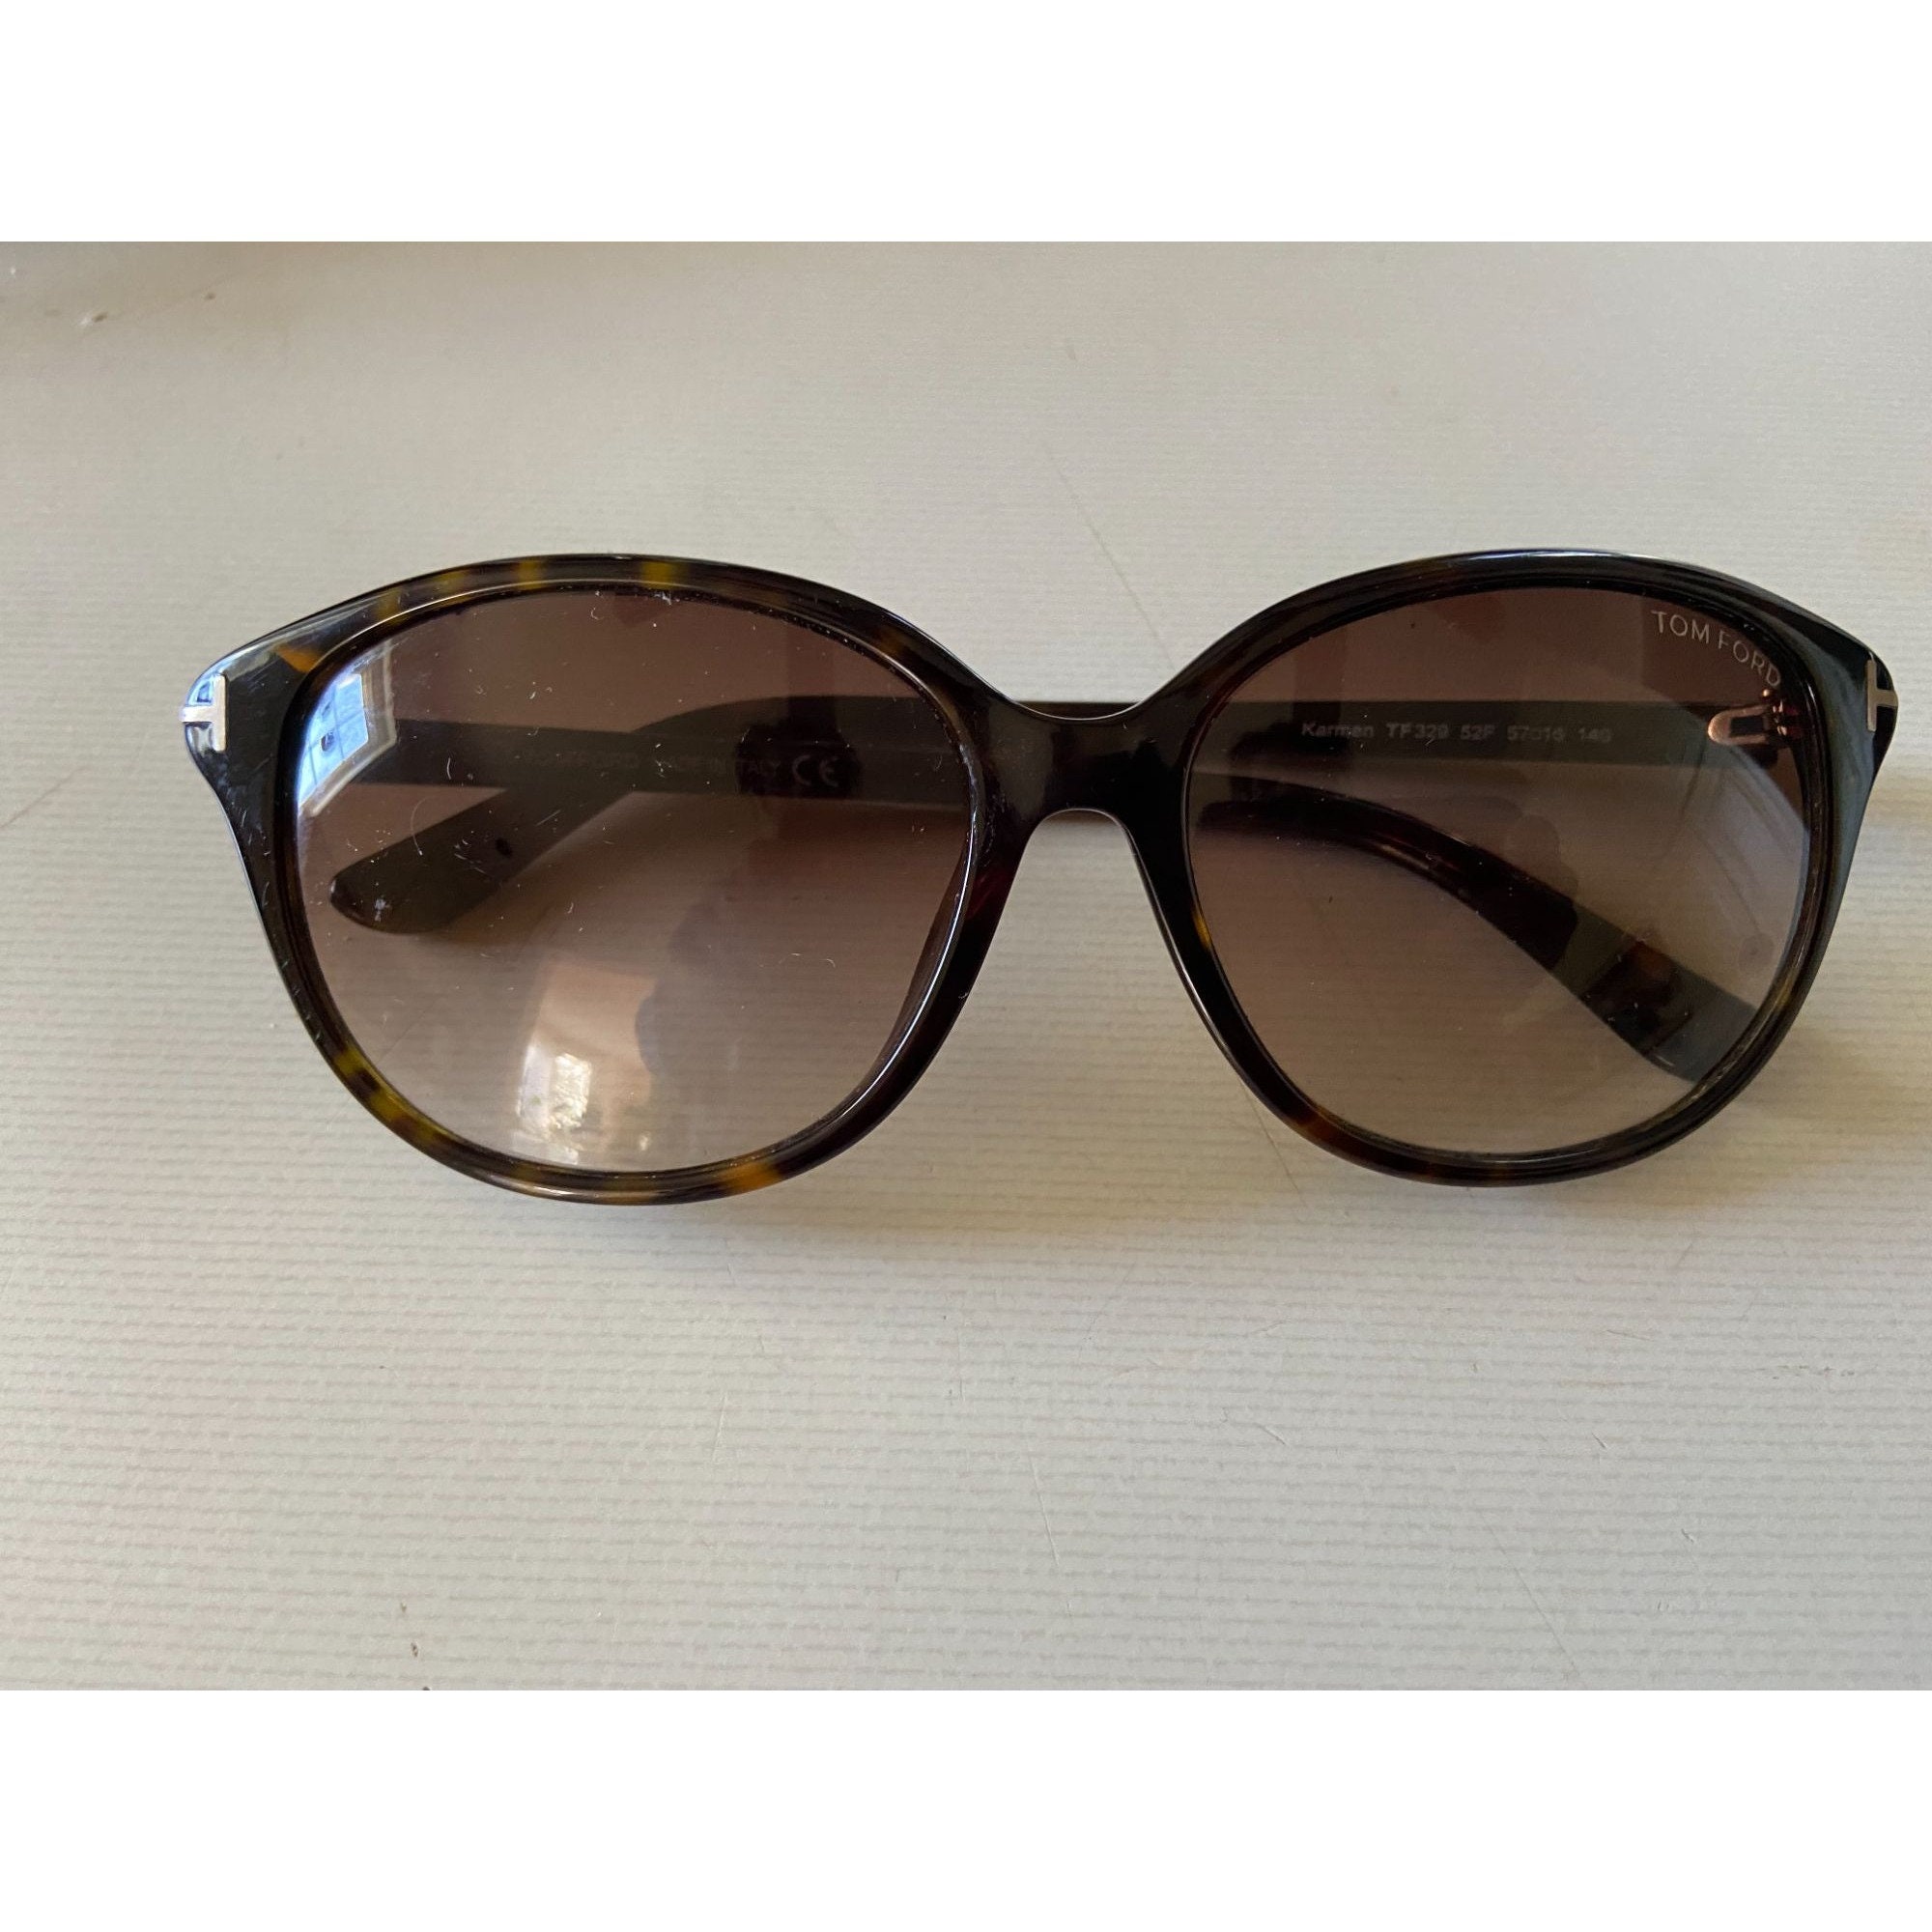 Ladies Tom Ford Sunglasses Karmen TF329 52F 5716 -